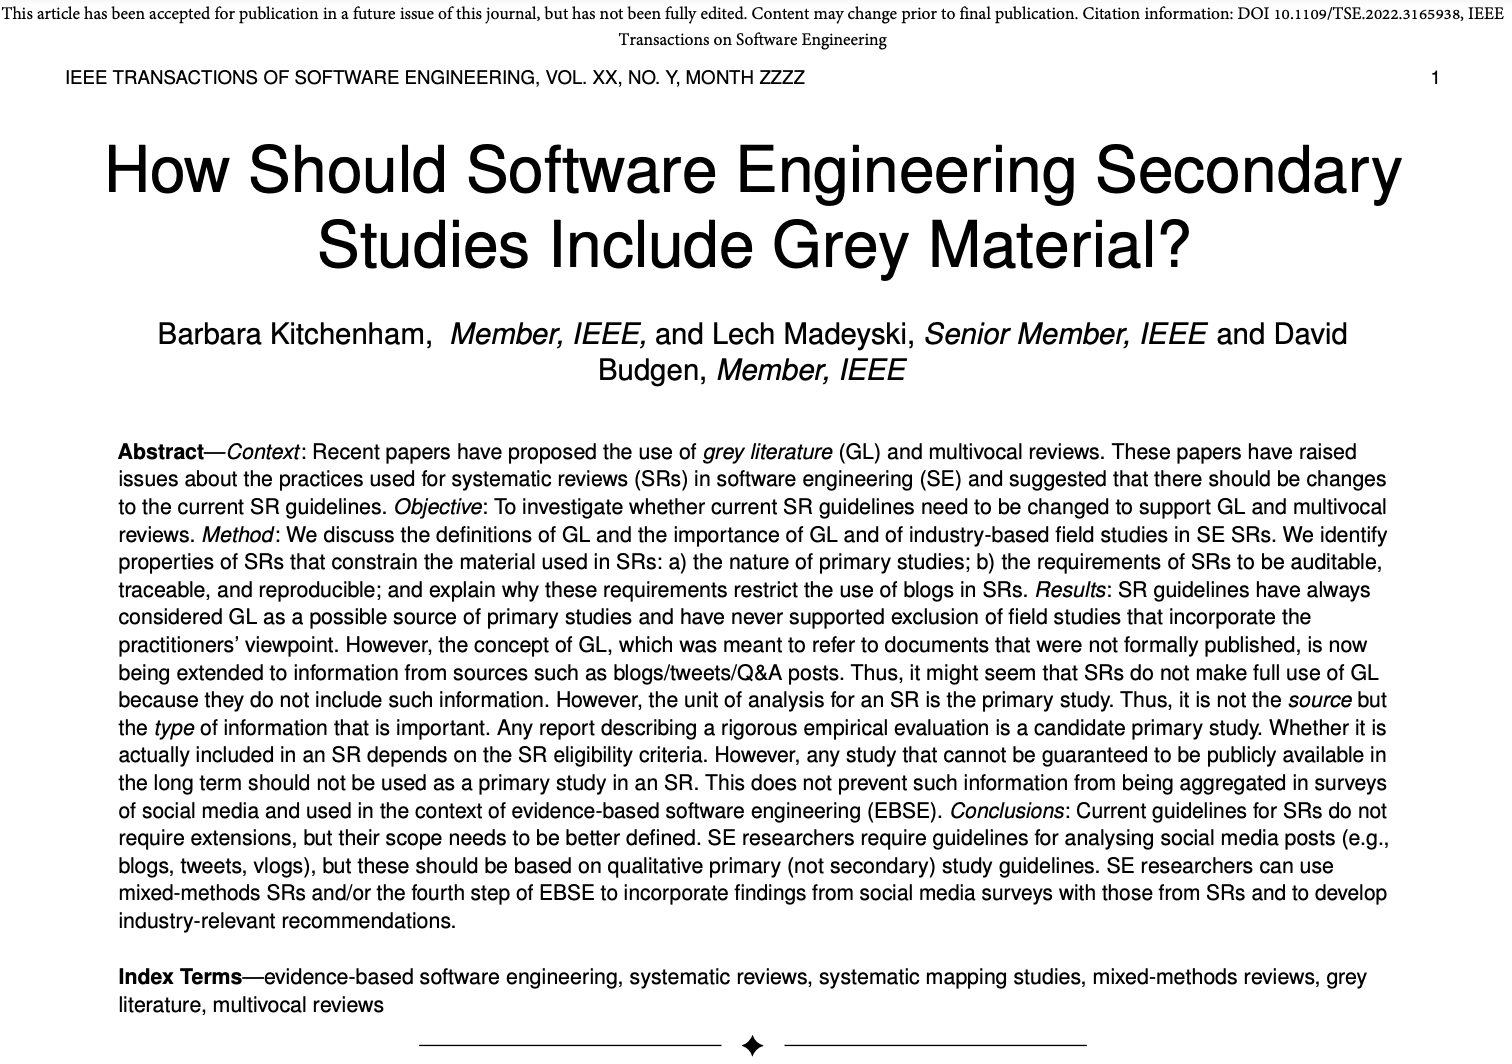 Kitchenham, Barbara Ann, Madeyski, Lech, and Budgen, David. SEGRESS: Software Engineering Guidelines for REporting Secondary Studies. IEEE Transactions on Software Engineering, DOI: 10.1109/TSE.2022.3174092